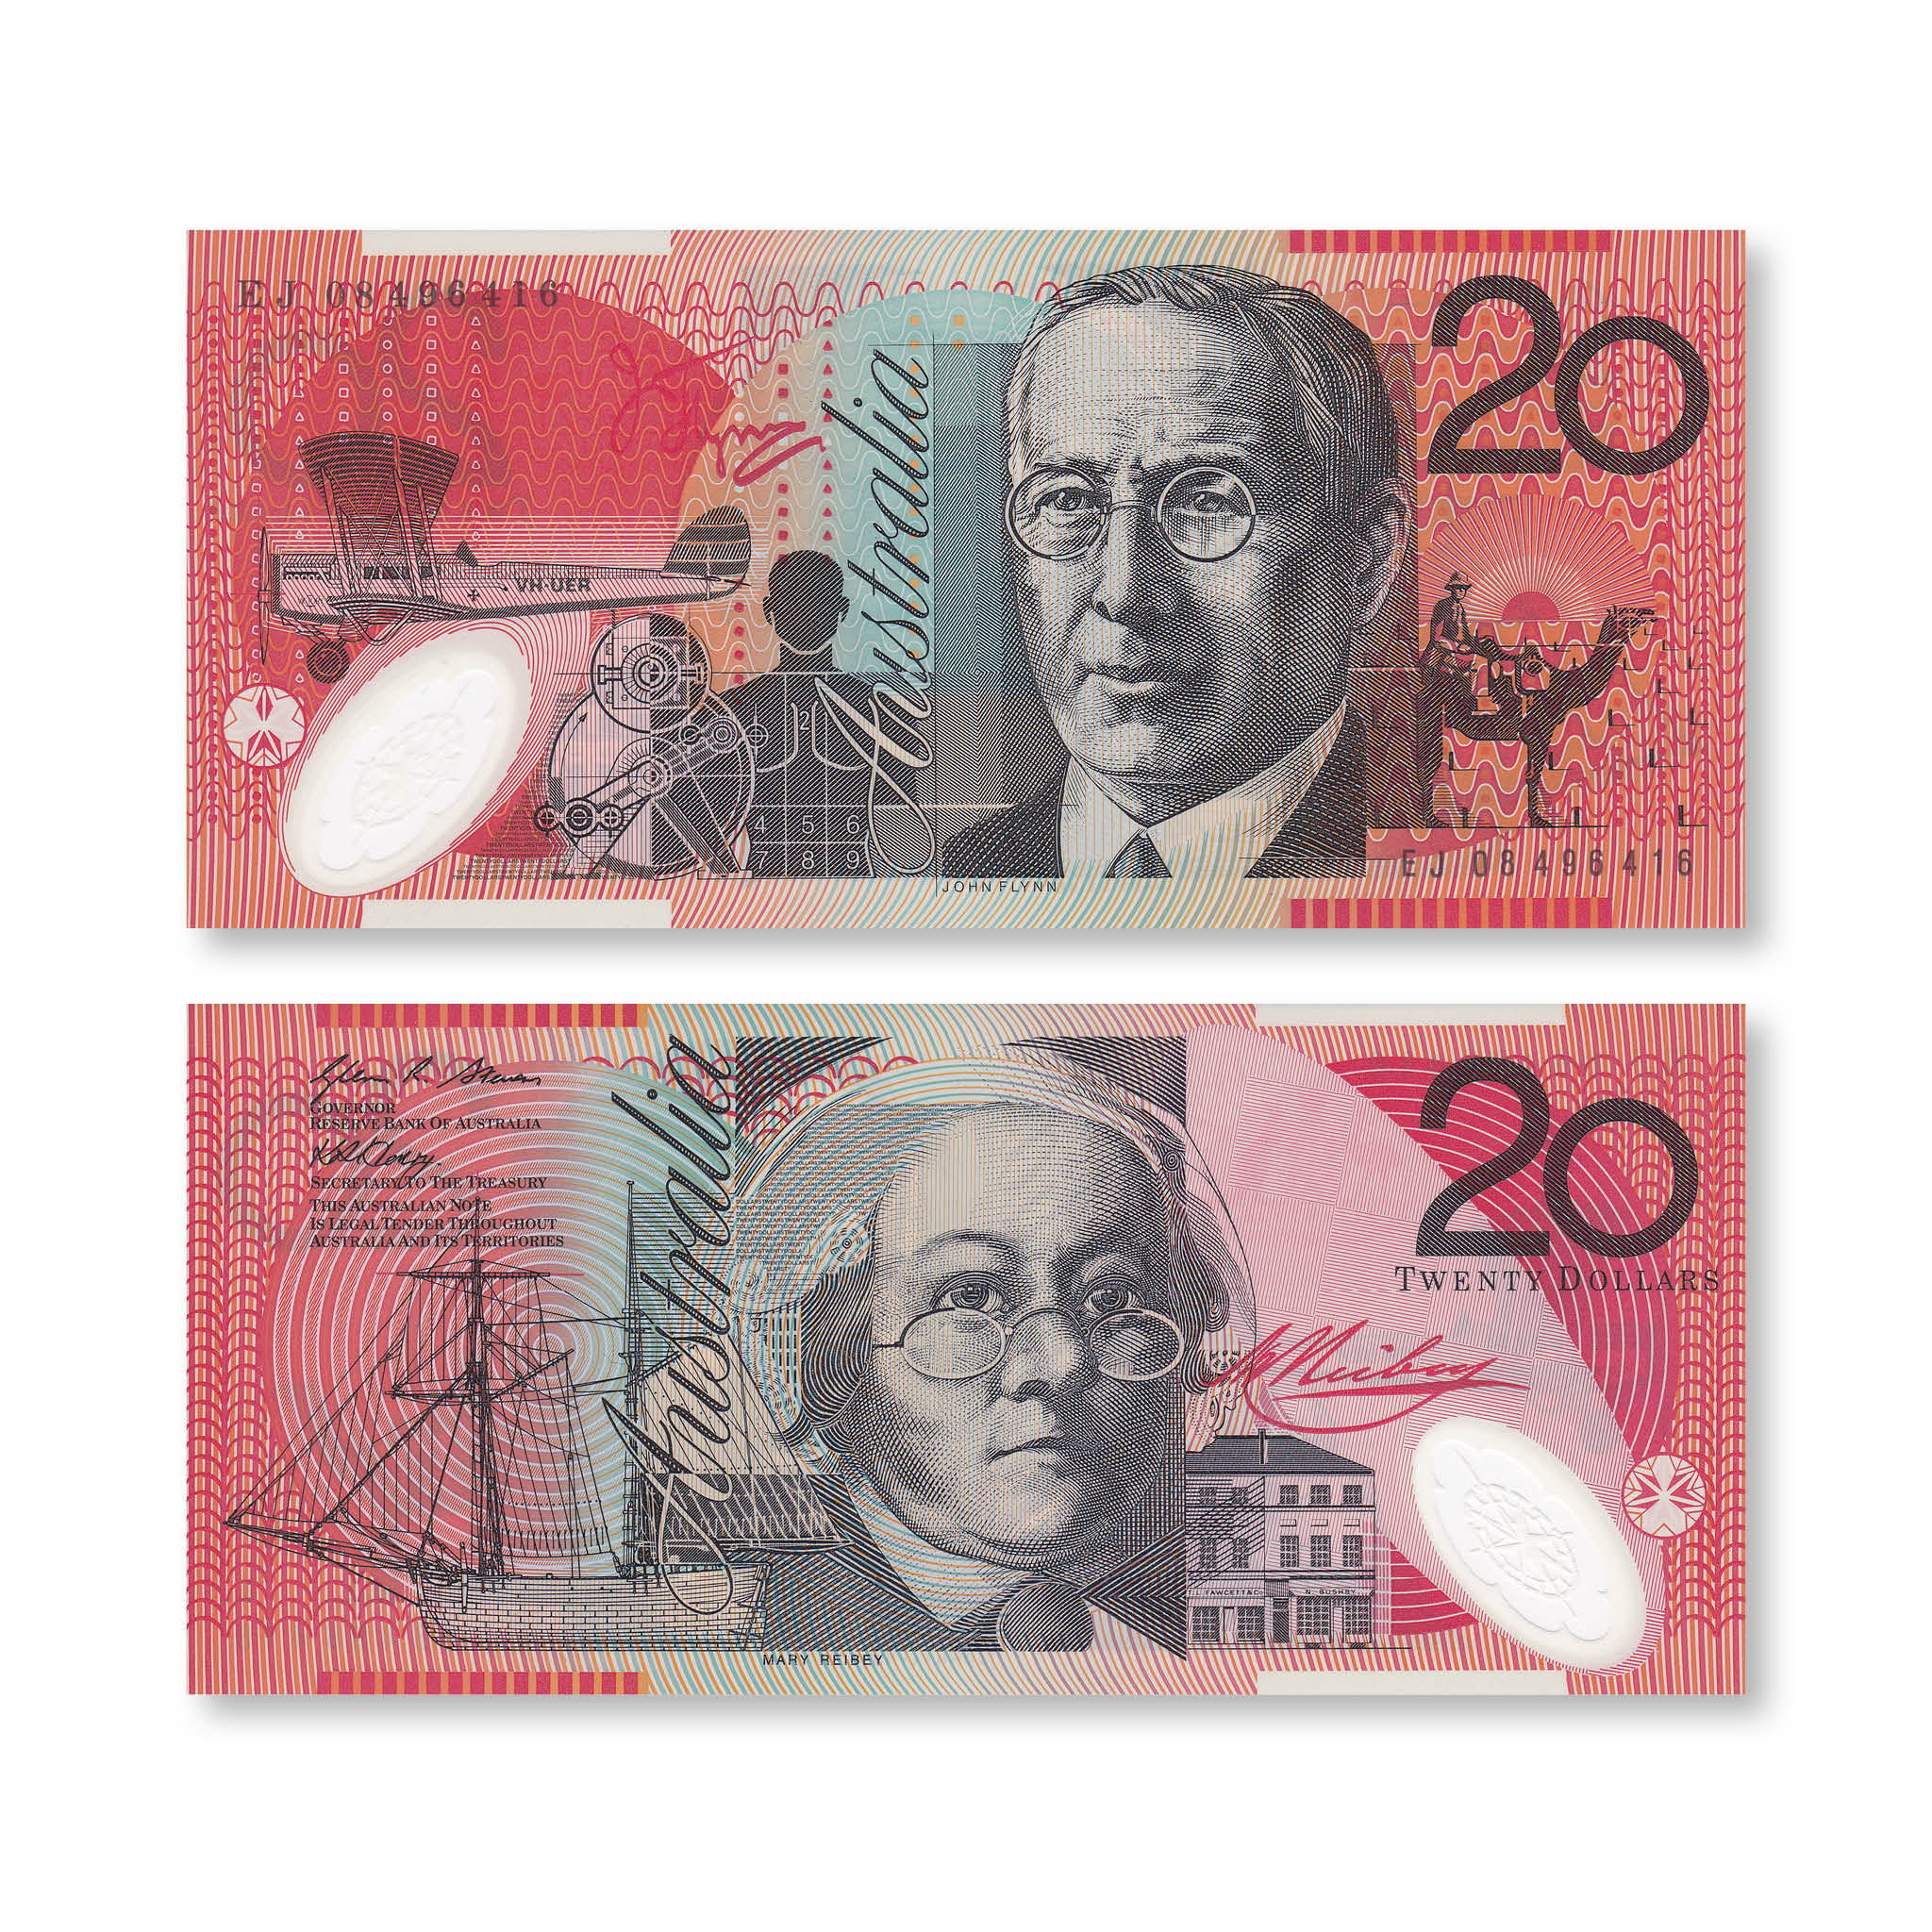 Australia 20 Dollars, 2008, B227f, P59f, UNC - Robert's World Money - World Banknotes